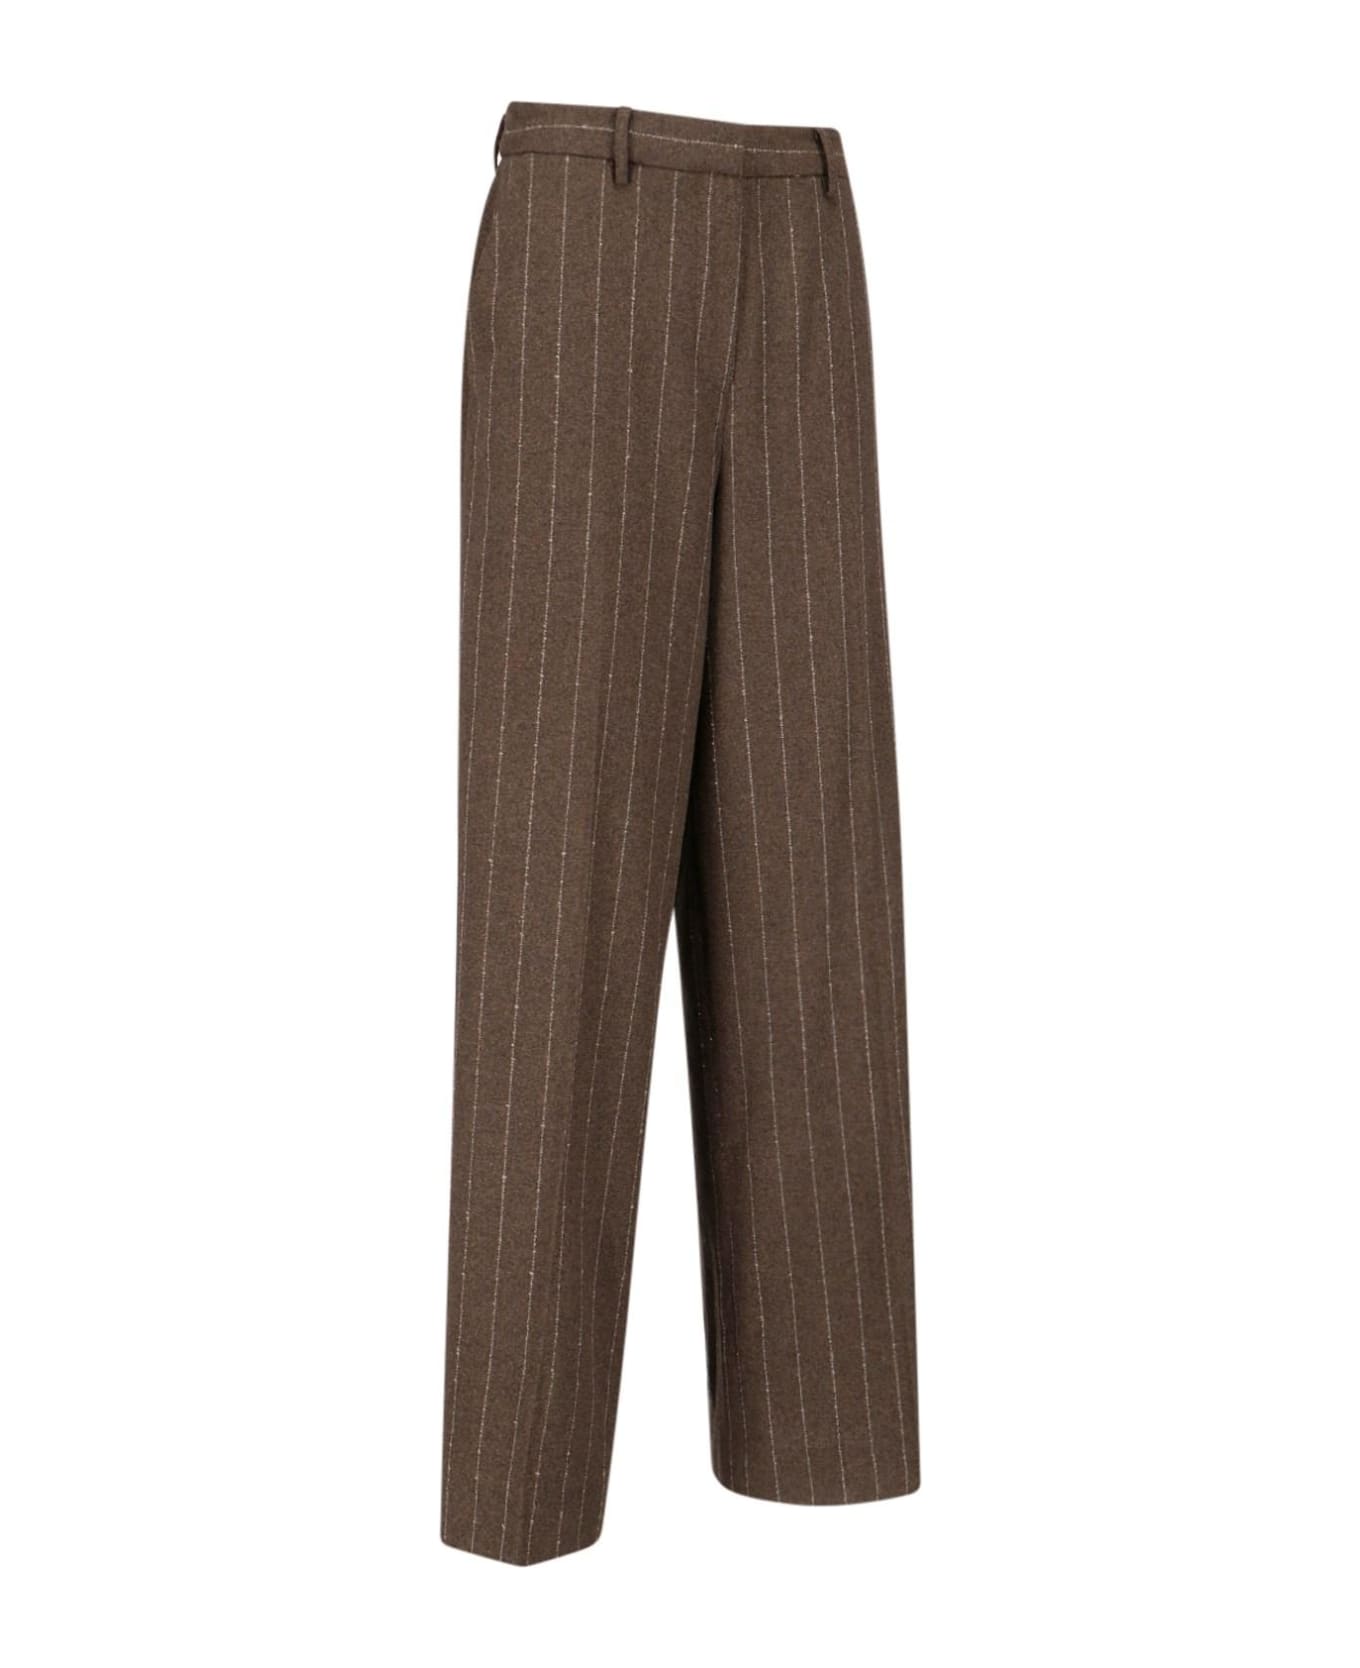 REMAIN Birger Christensen Stitched Tailored Pants - Brown